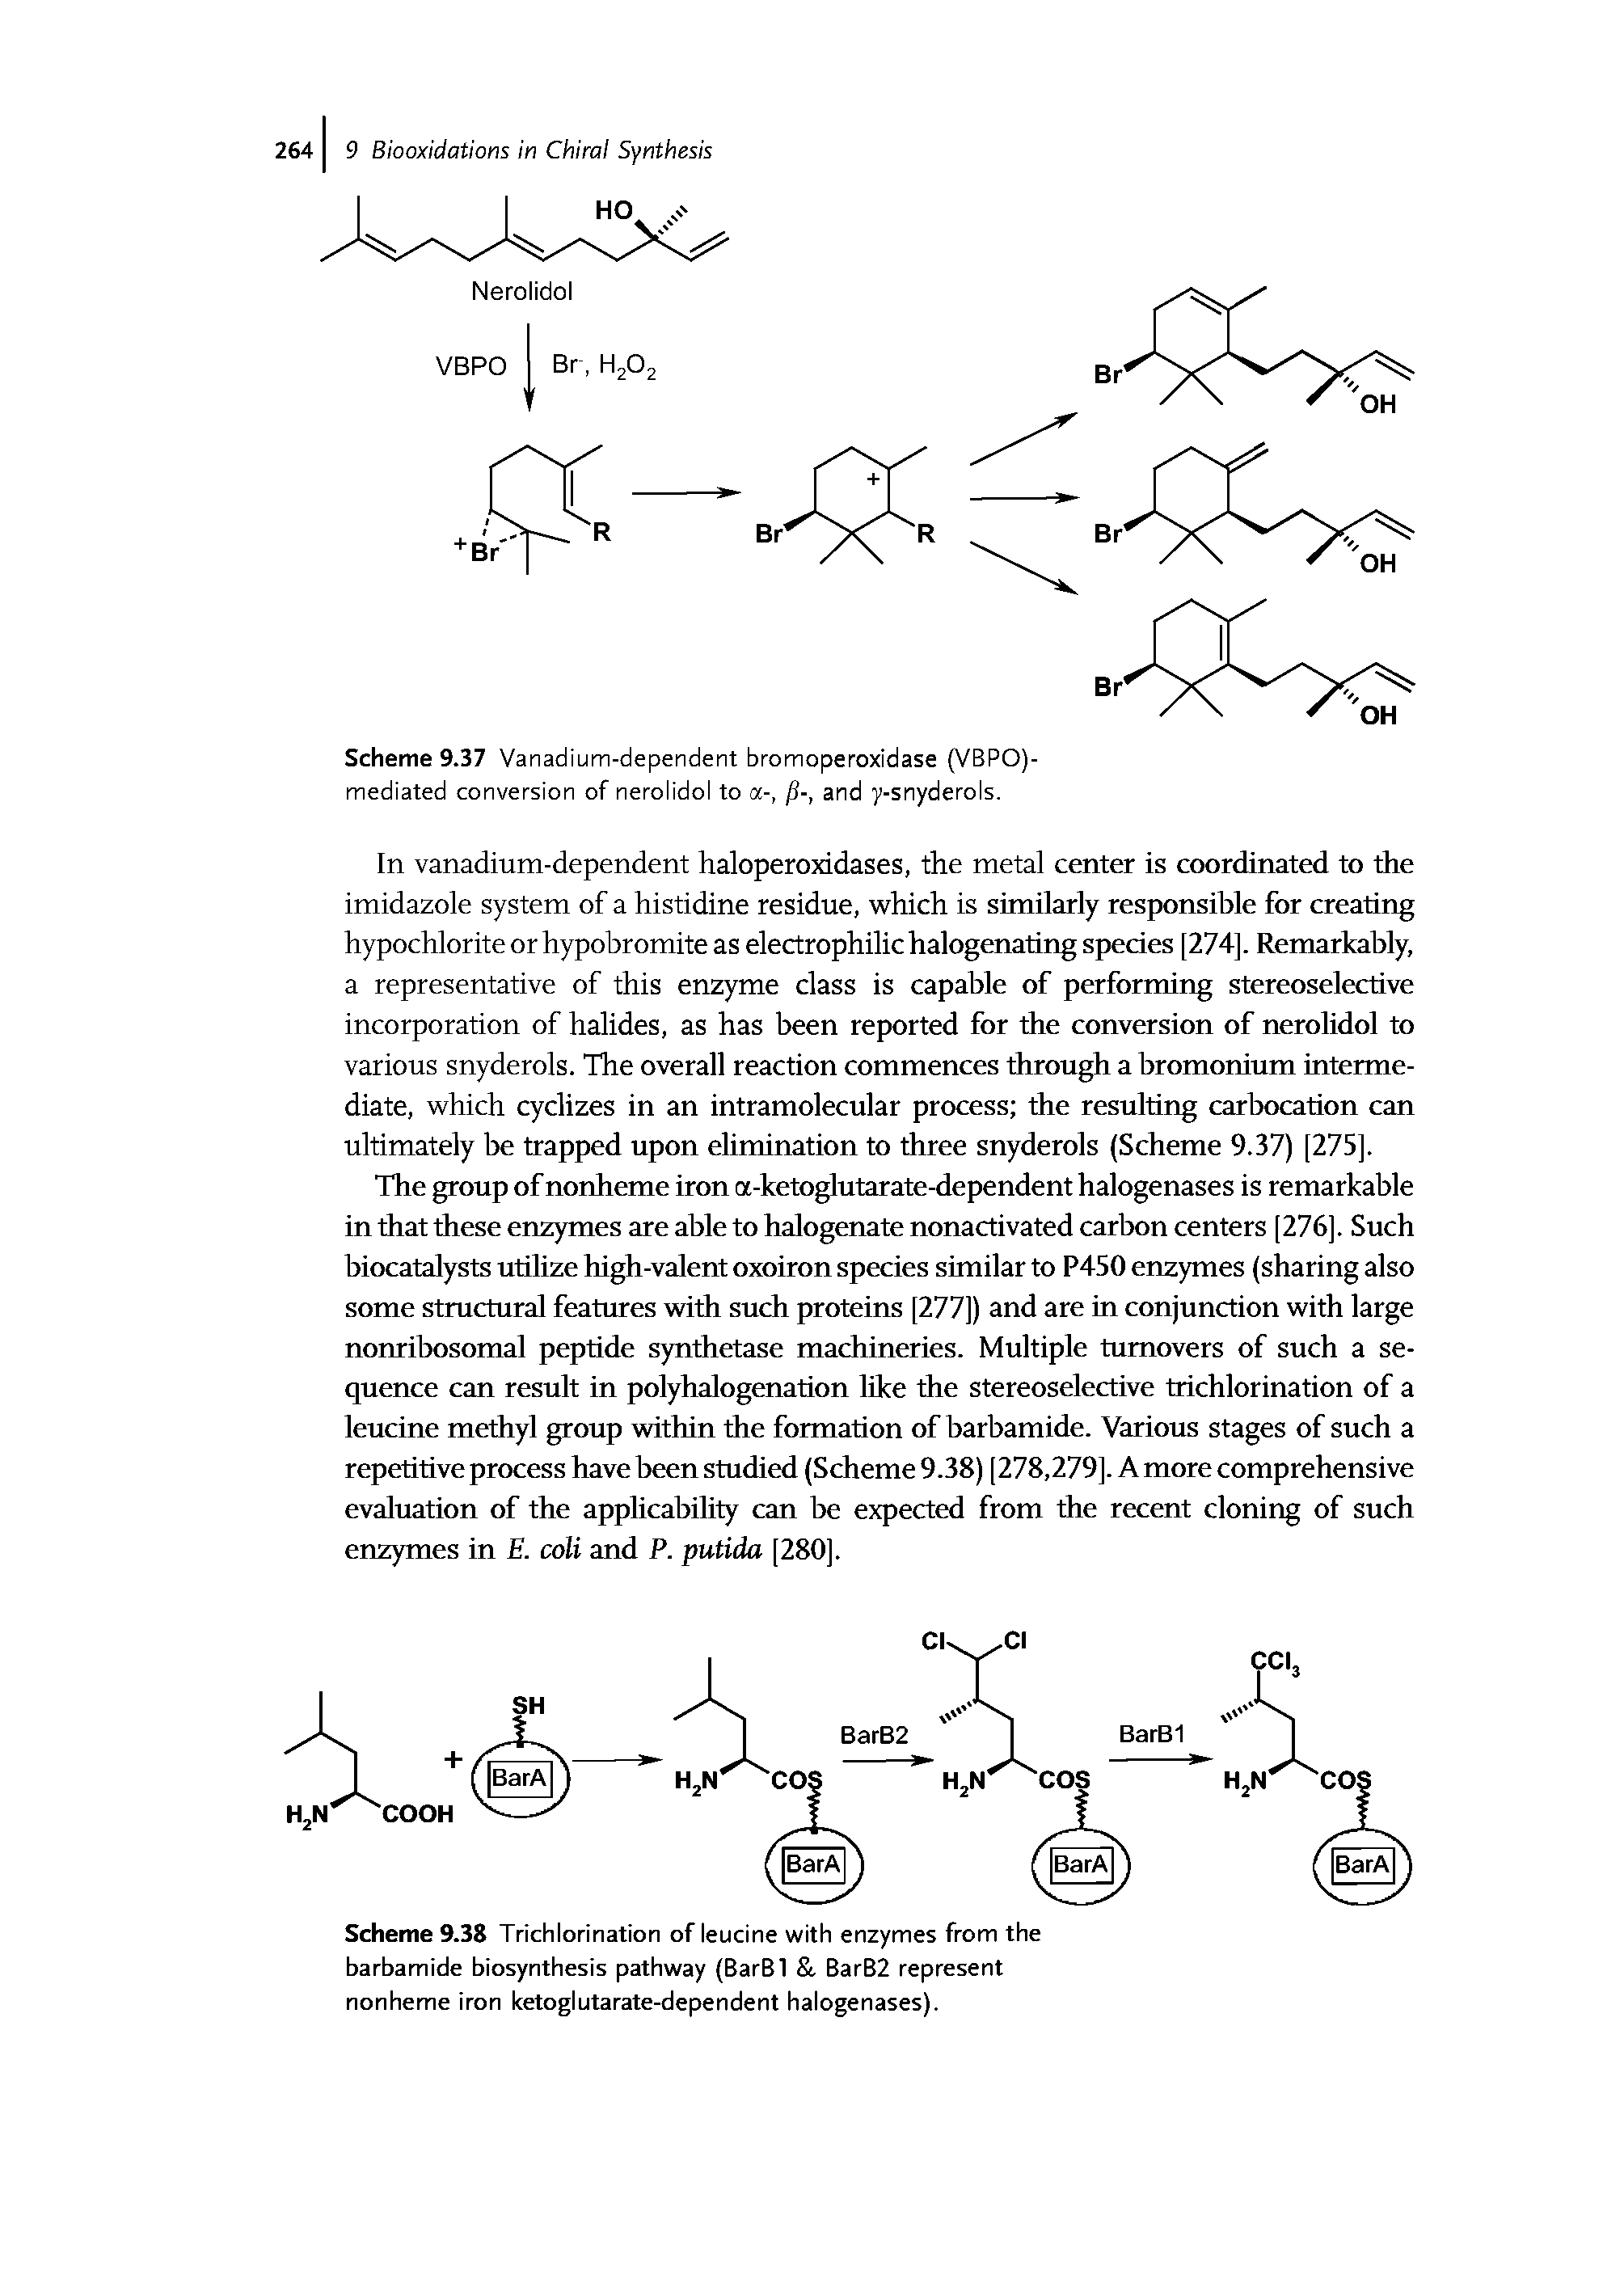 Scheme 9.37 Vanadium-dependent bromoperoxidase (VBPO)-mediated conversion of nerolidol to a-, fl-, and y-snyderols.